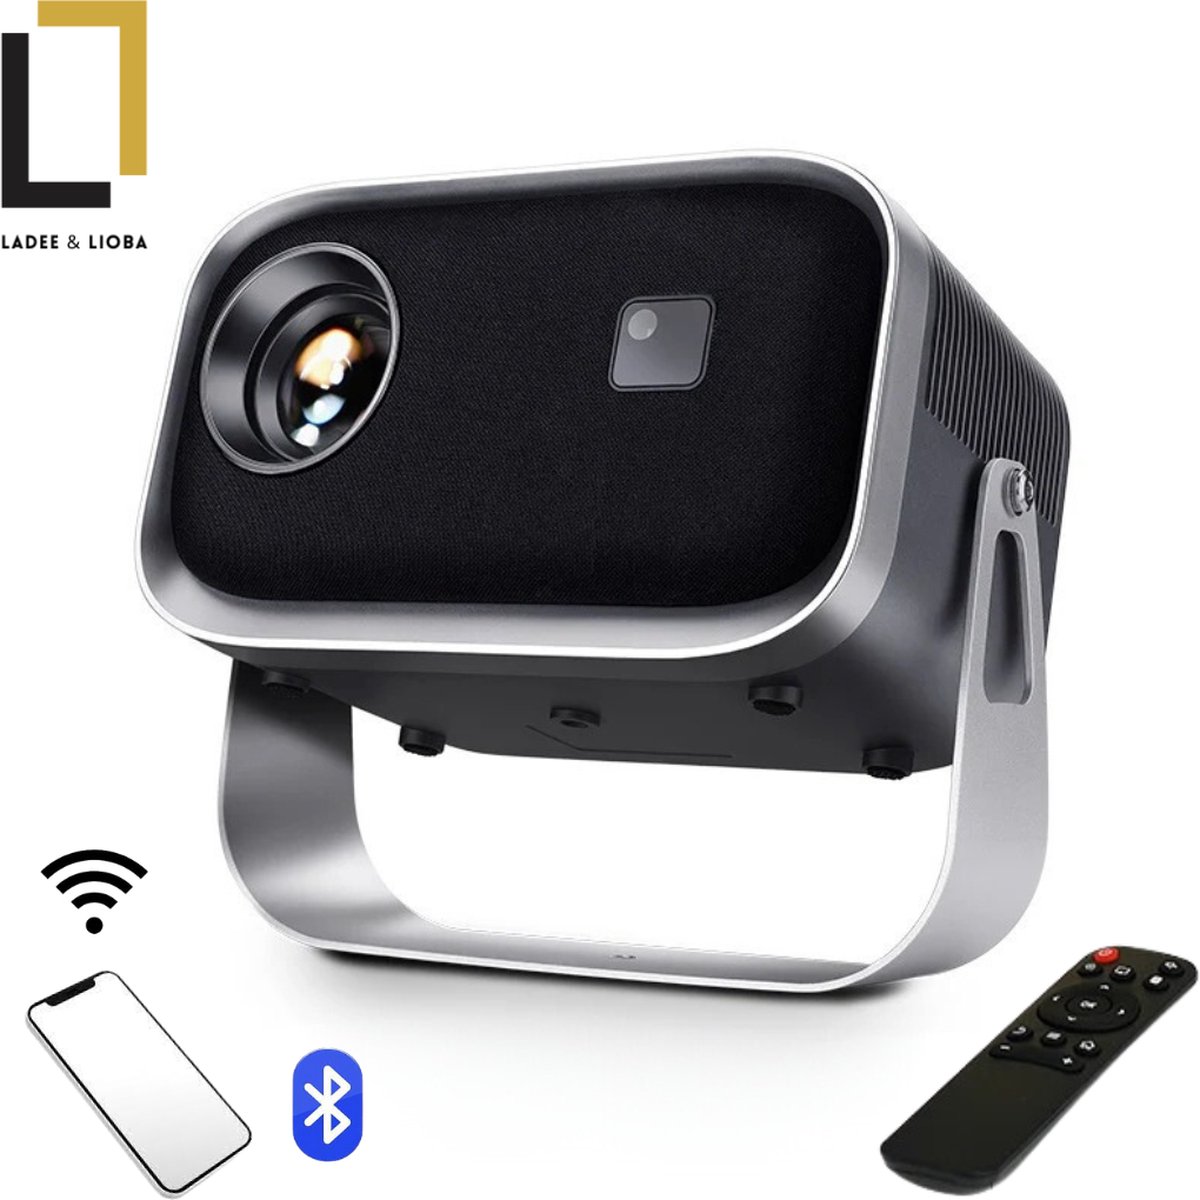 Ladee&Lioba Beamer Full HD - Draagbare Mini Beamer - Projector WiFi, HDMI, Bluetooth - zwart/grijs